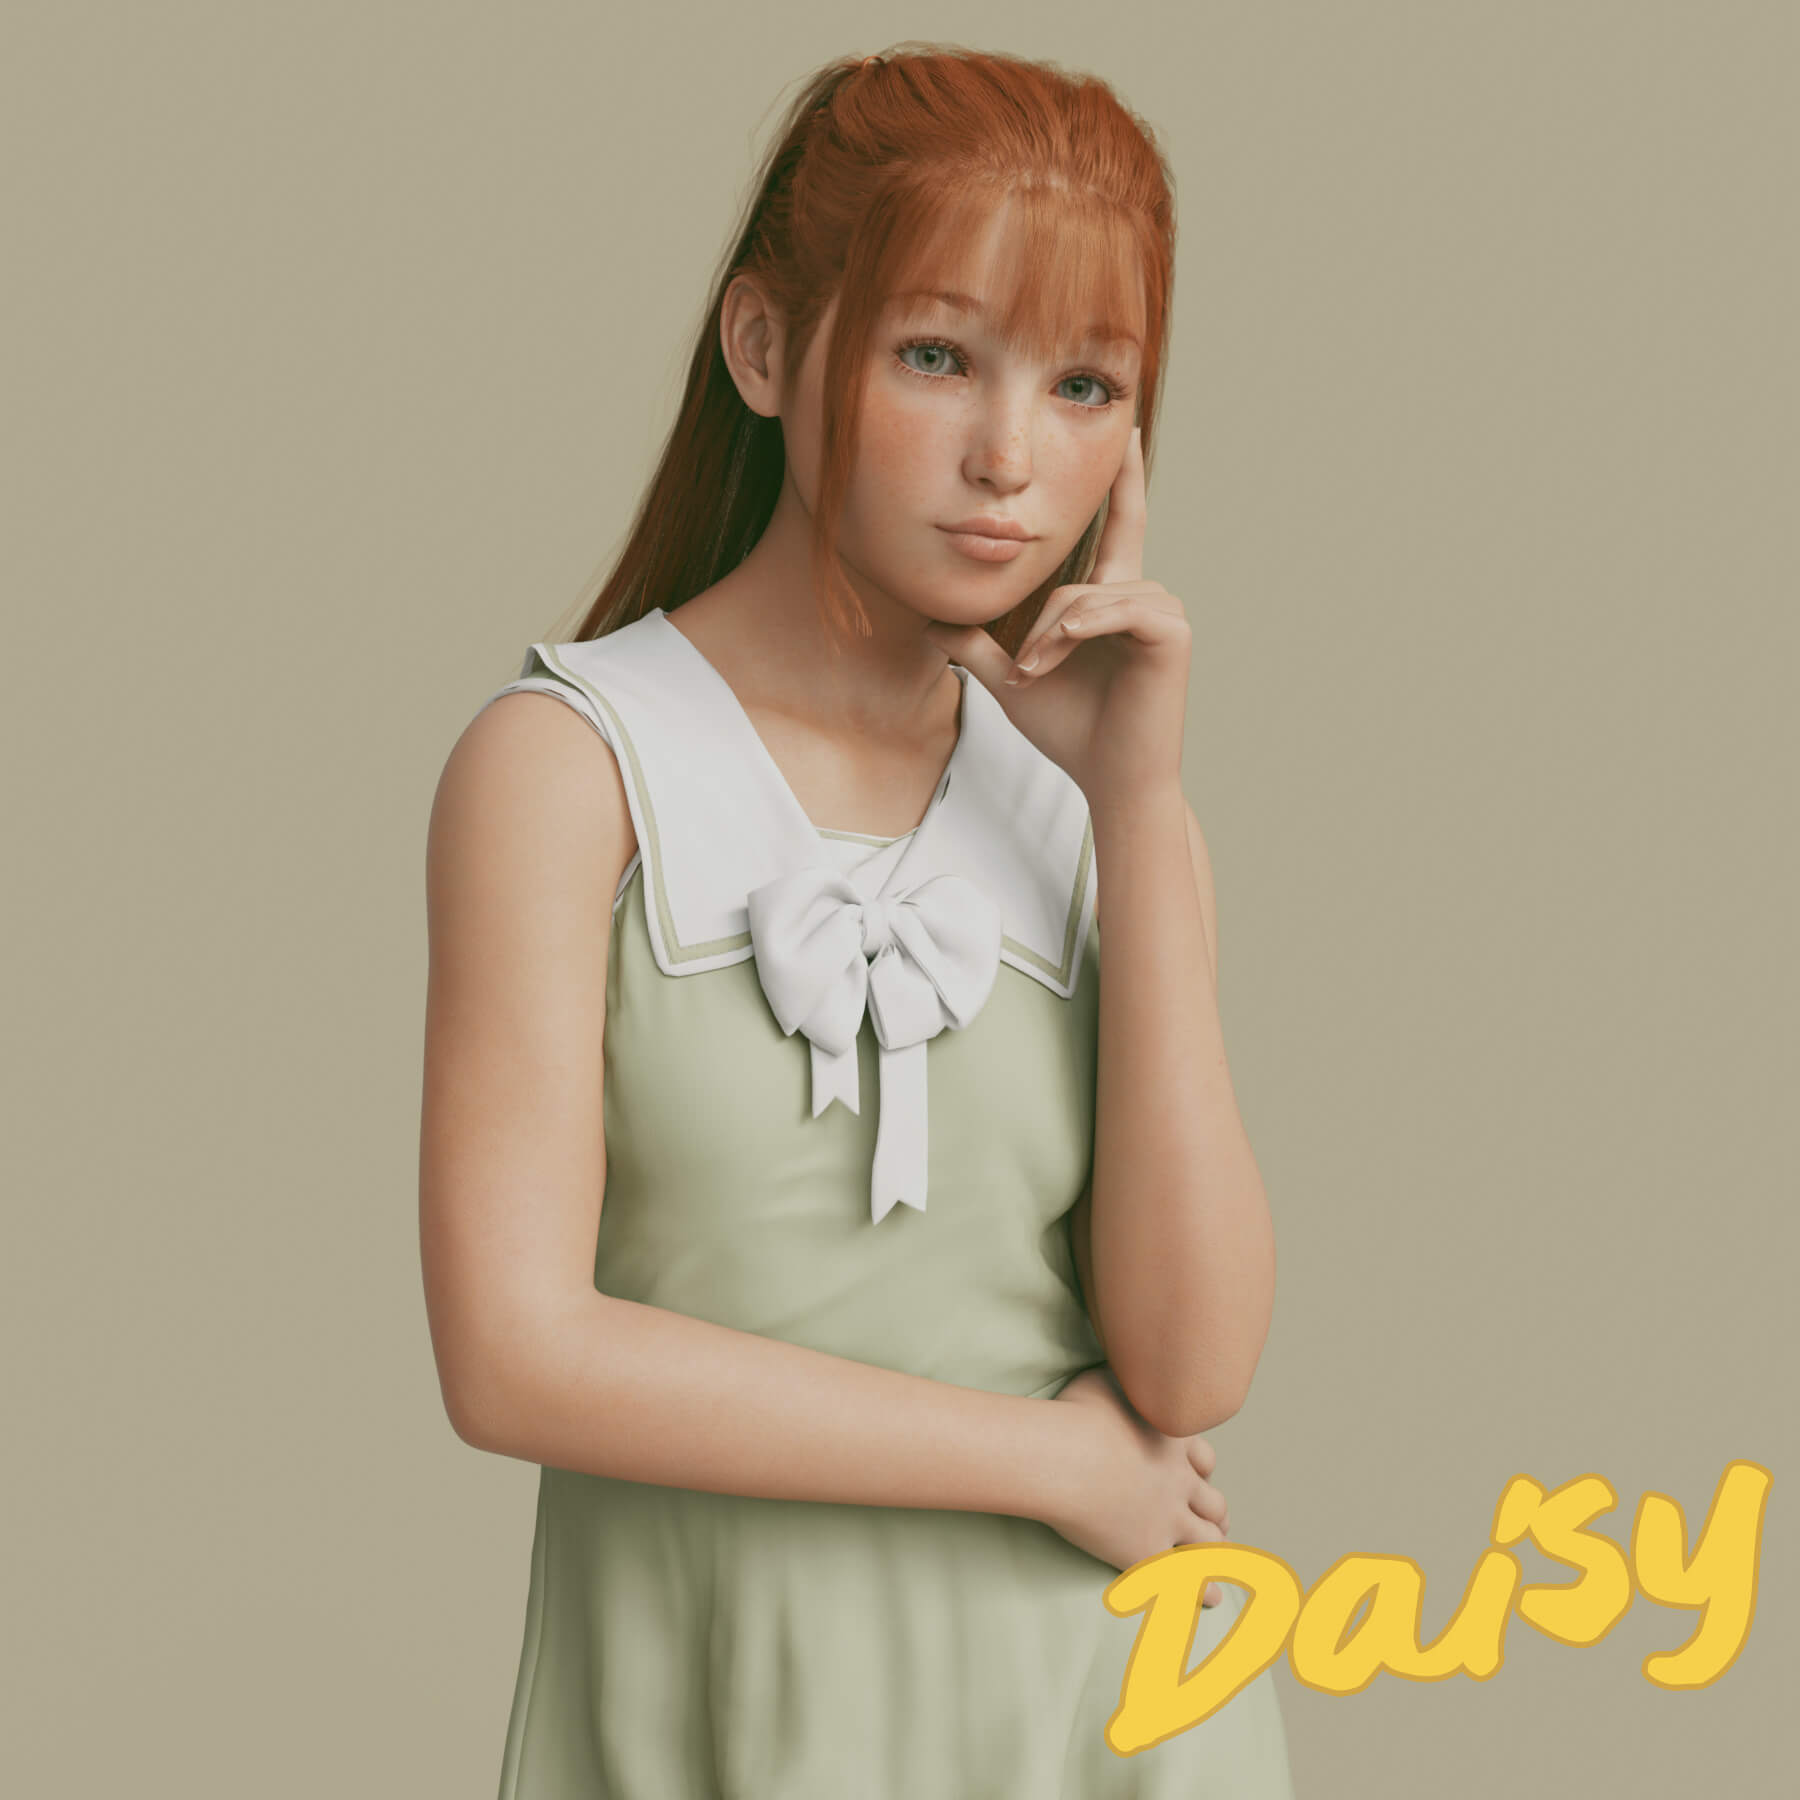 daisy character morph for genesis 8 female 01 1713529805